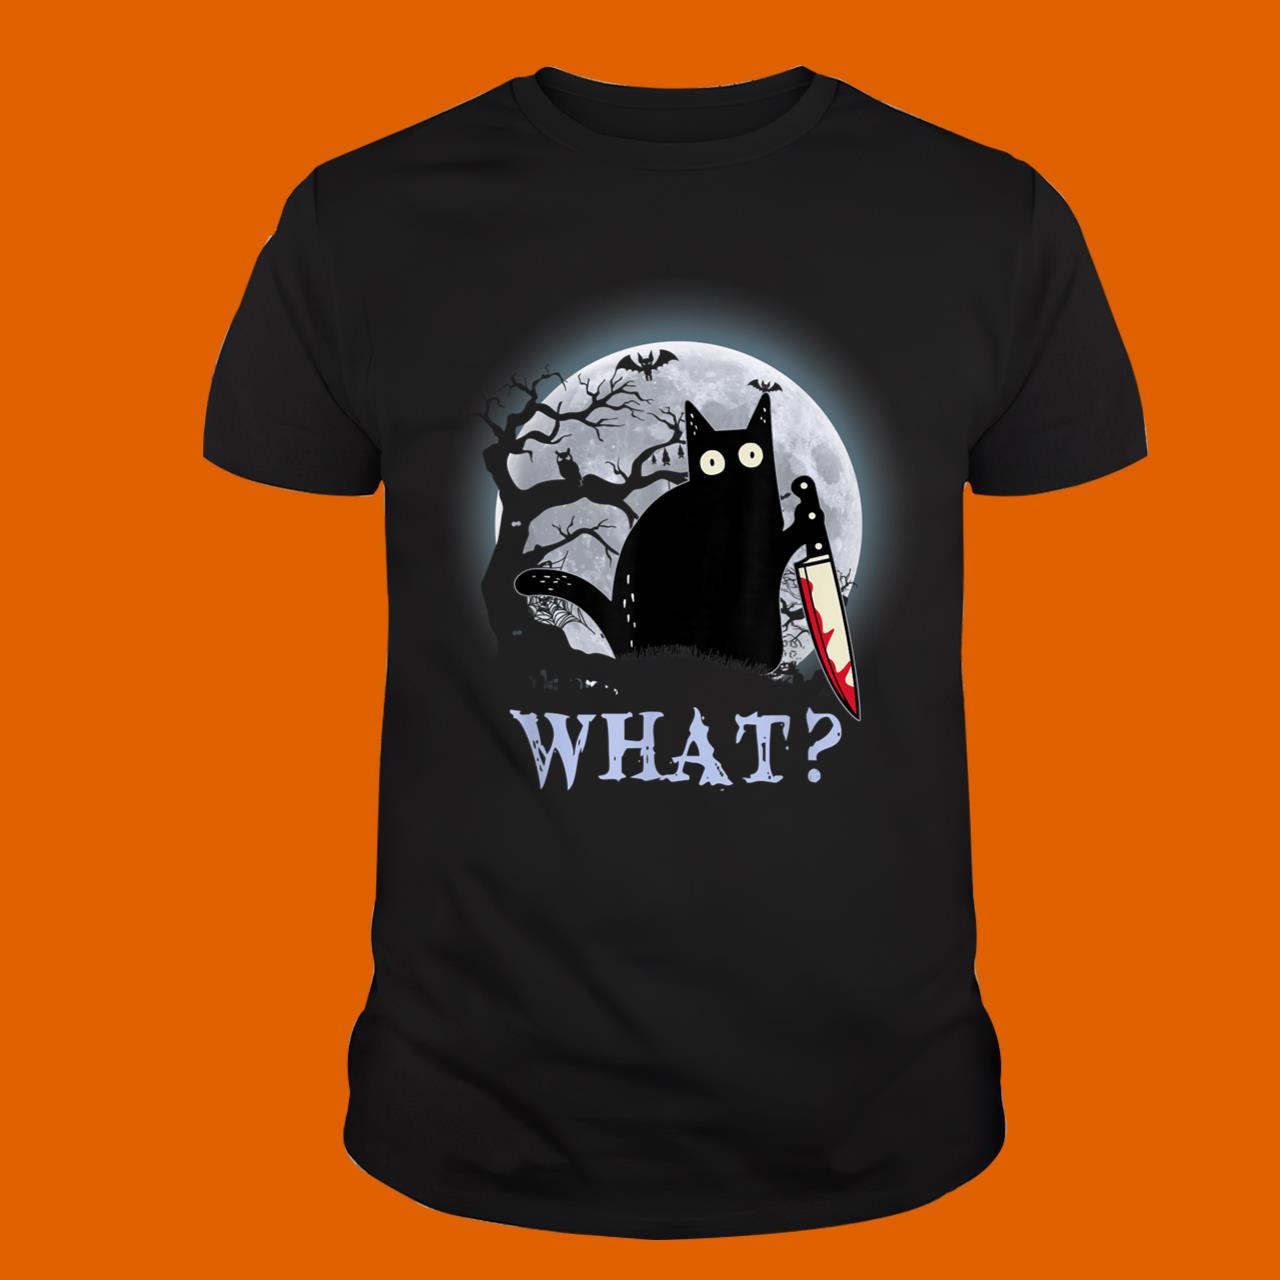 Murderous Black Cat With Knife Halloween Costume T-Shirt